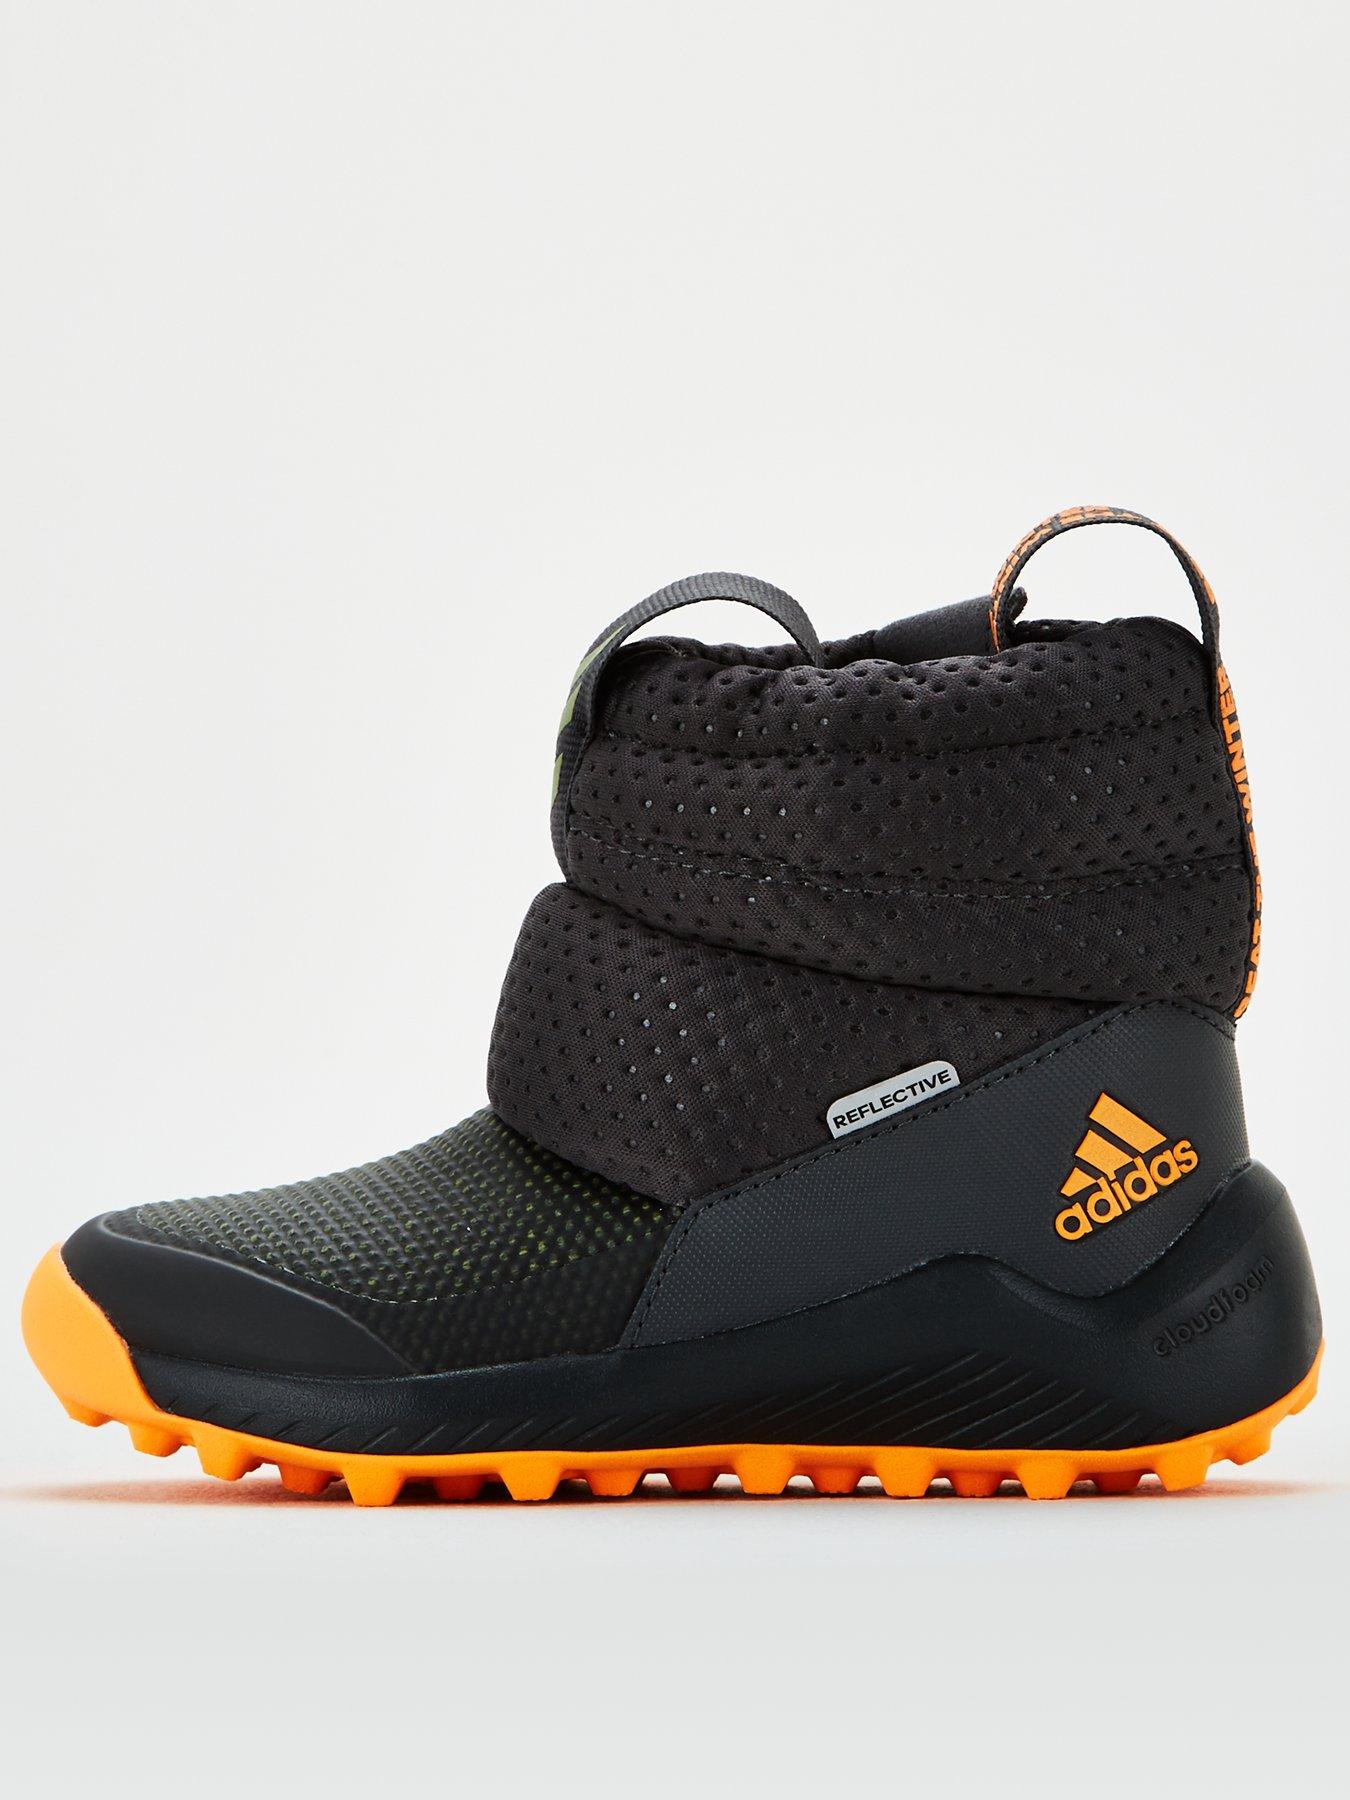 adidas rapida snow boots